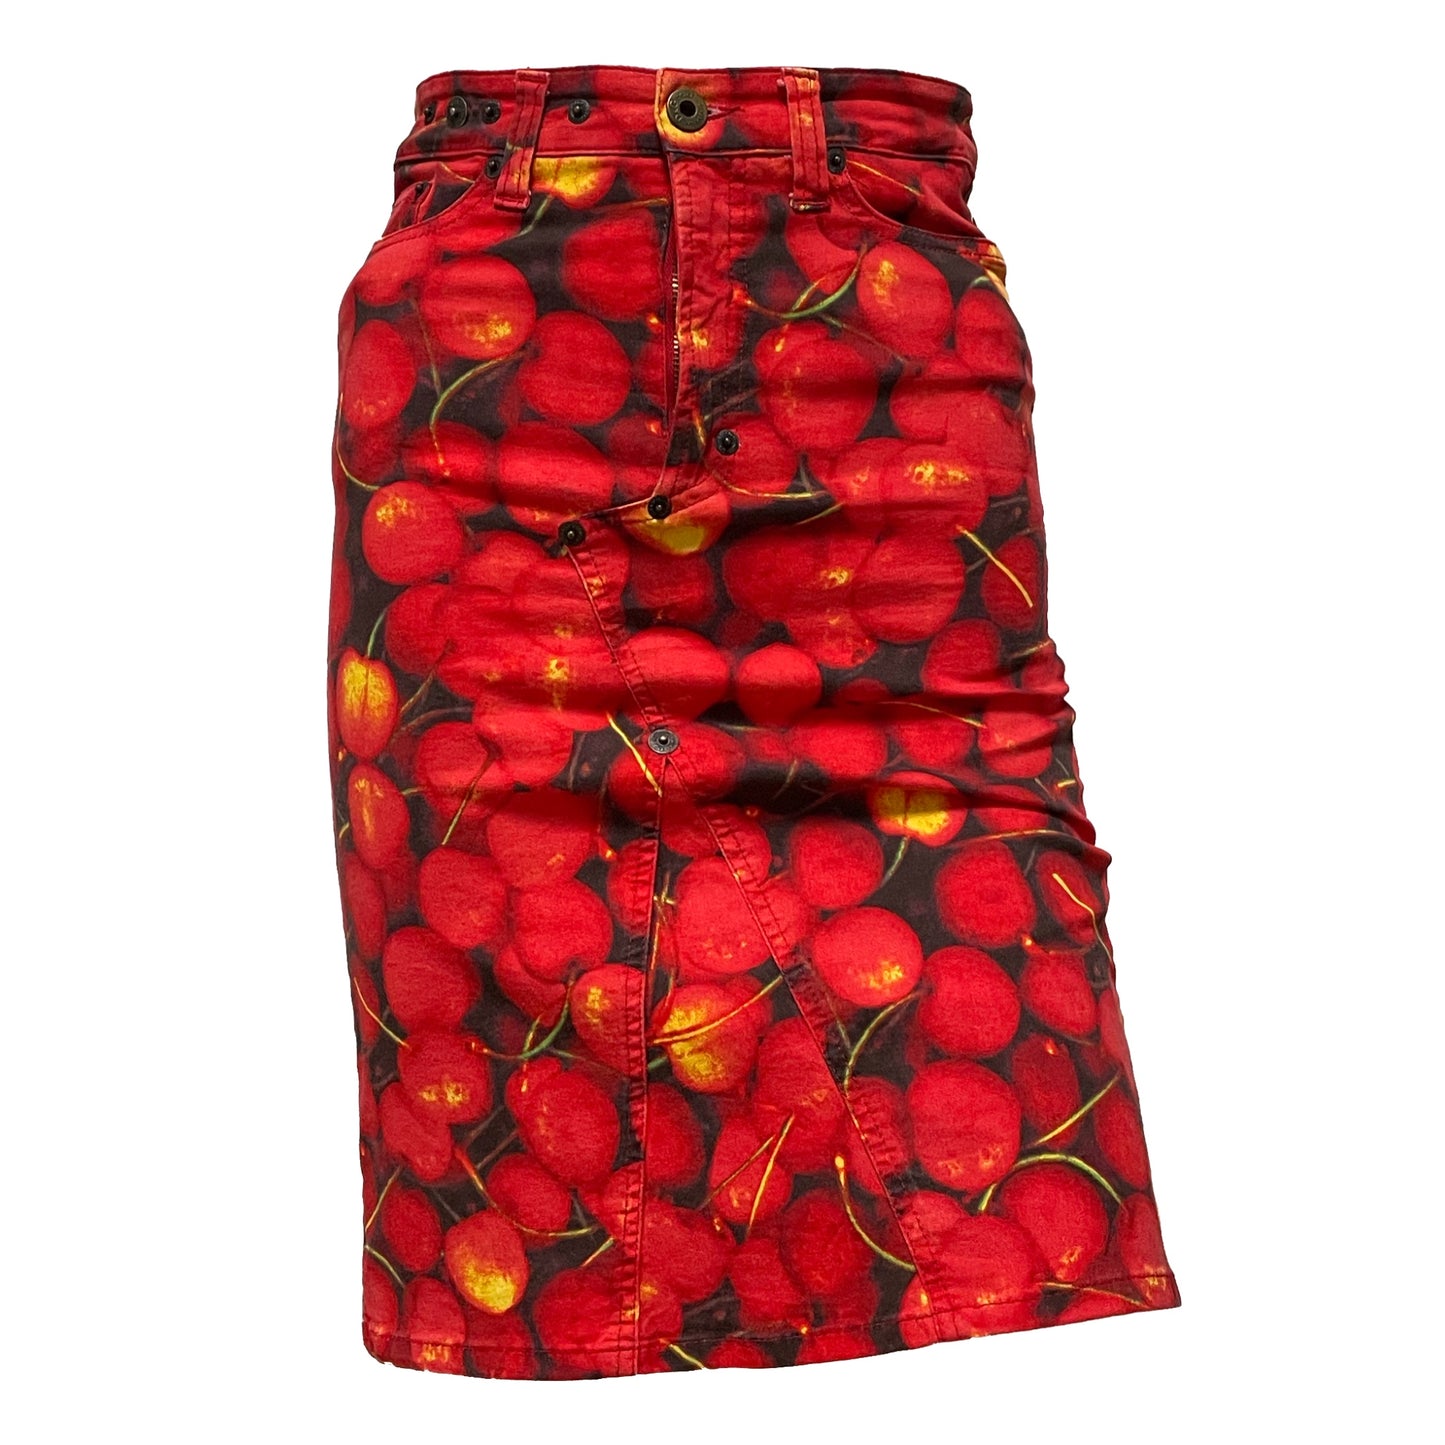 D&G Cherry Print Tight Skirt